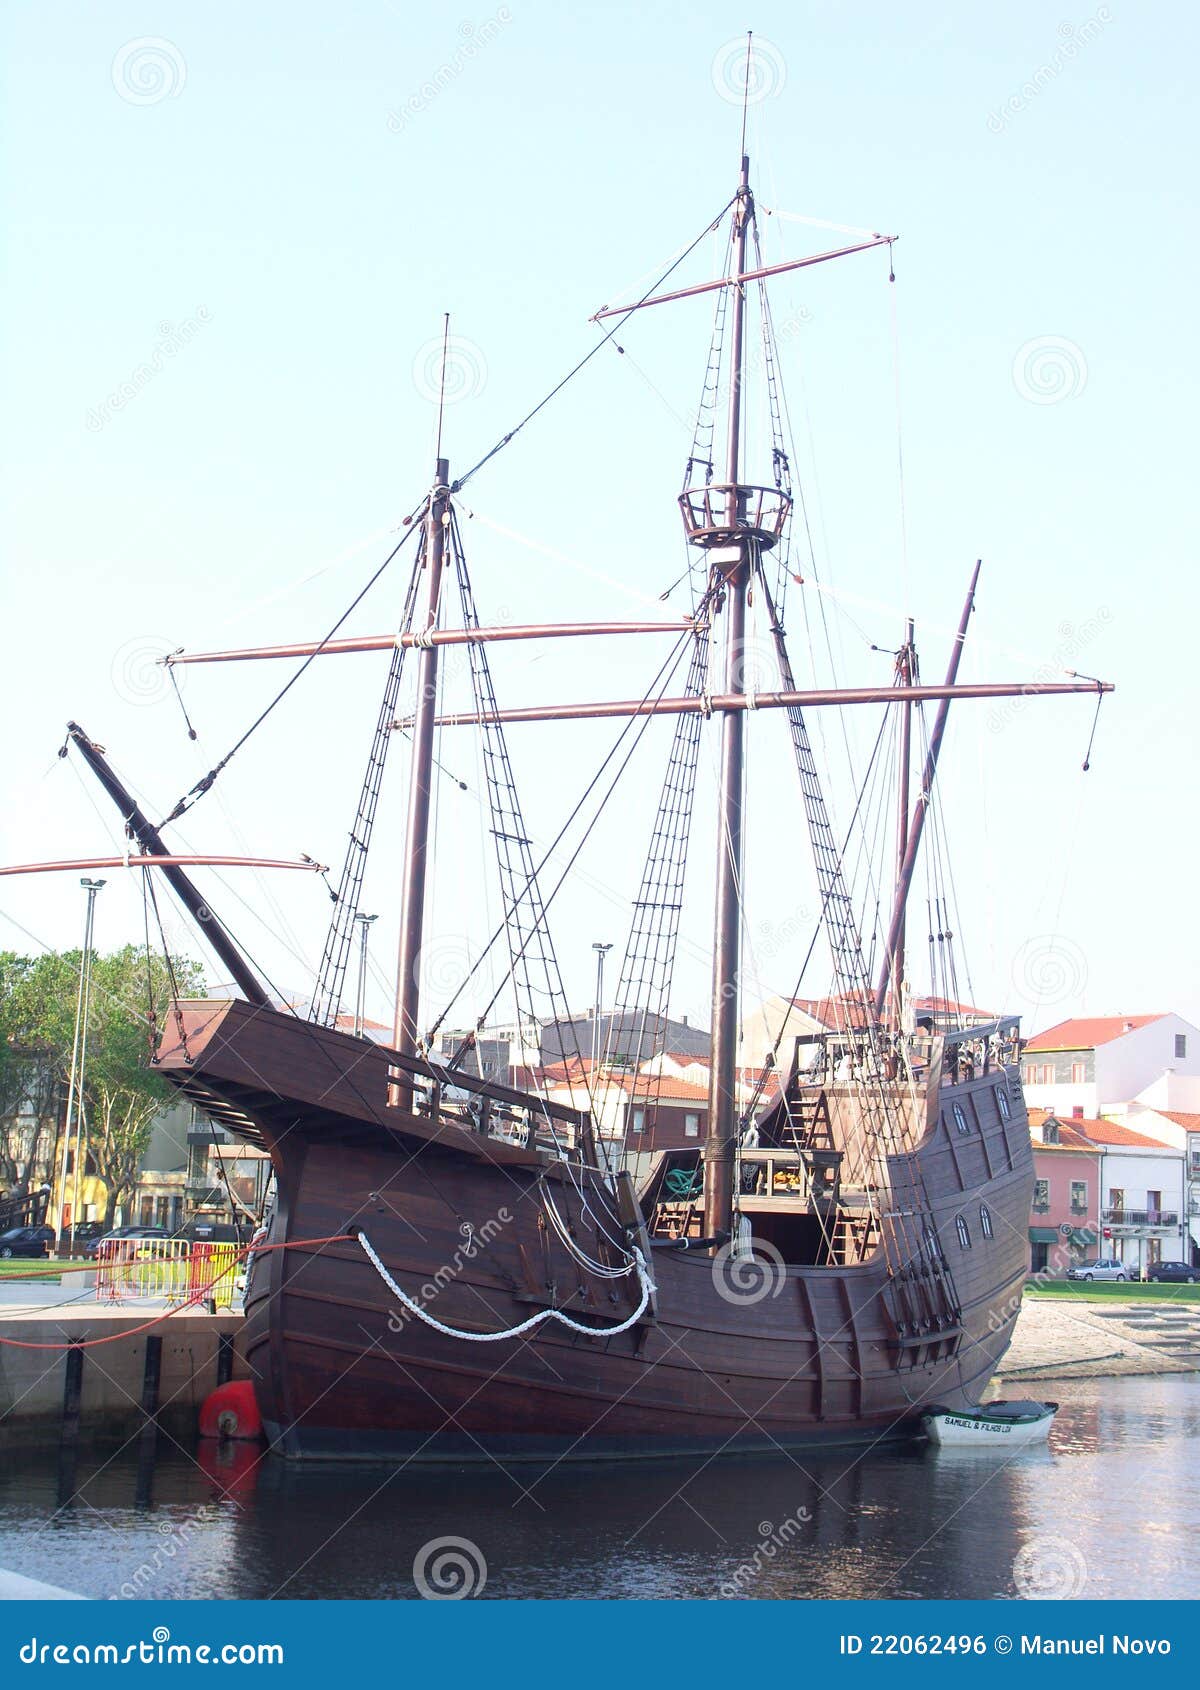 sixteenth century ship